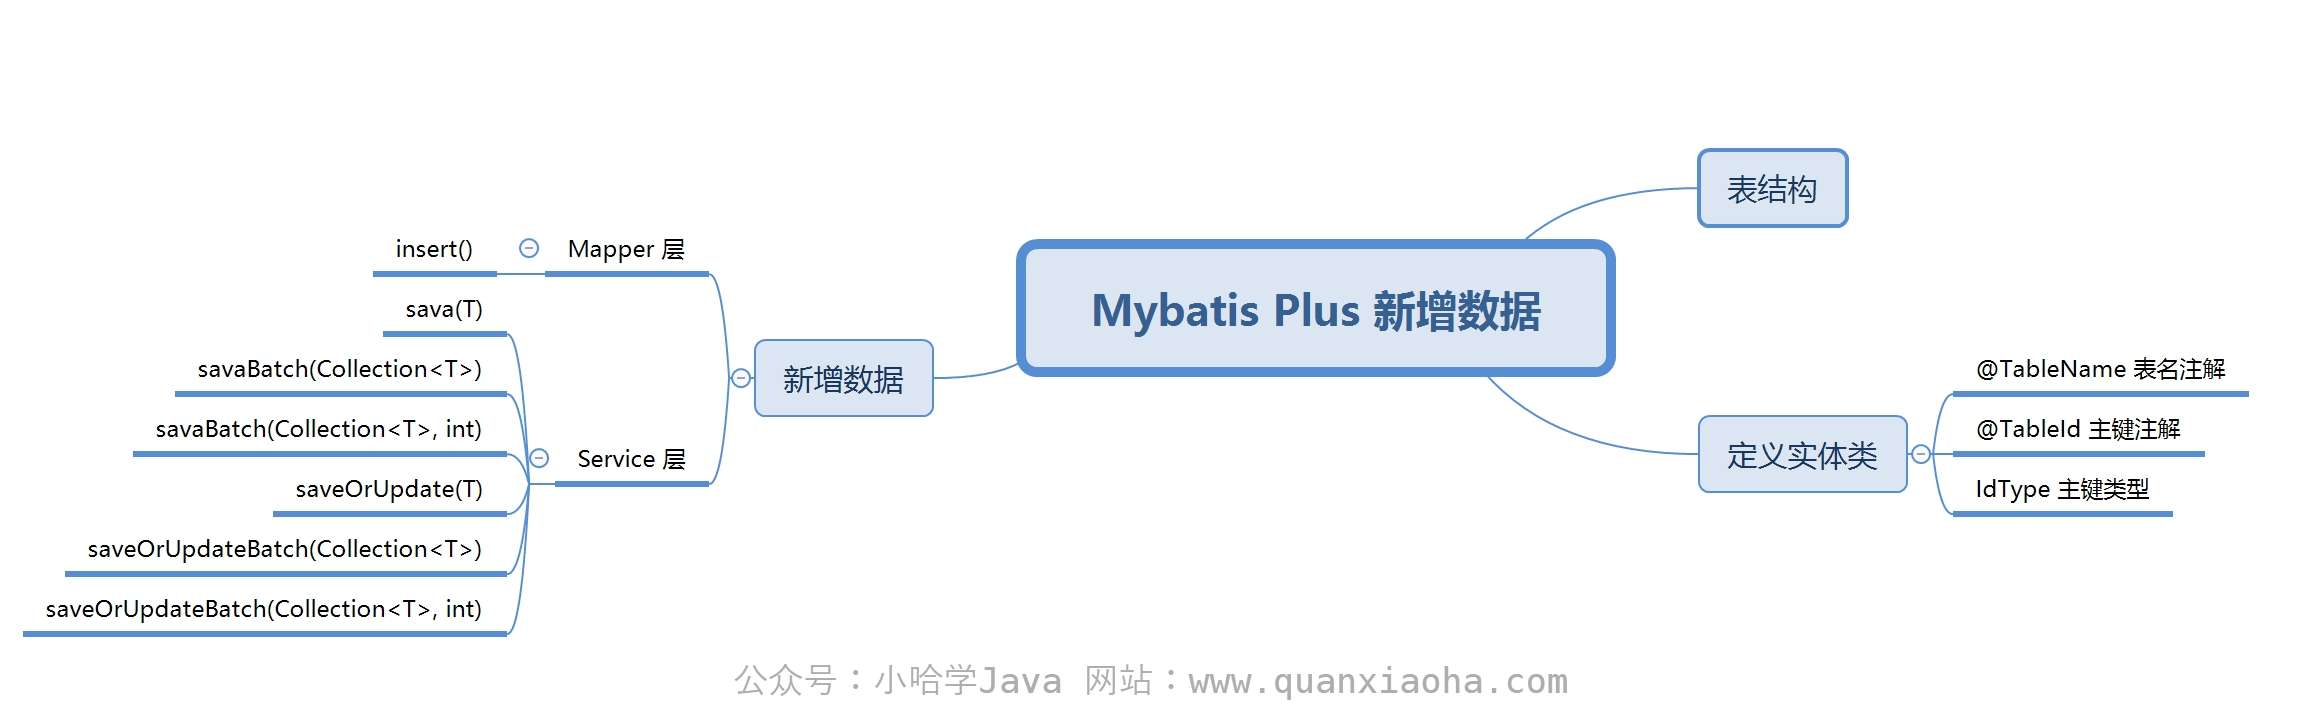 Mybatis Plus 新增数据思维导图